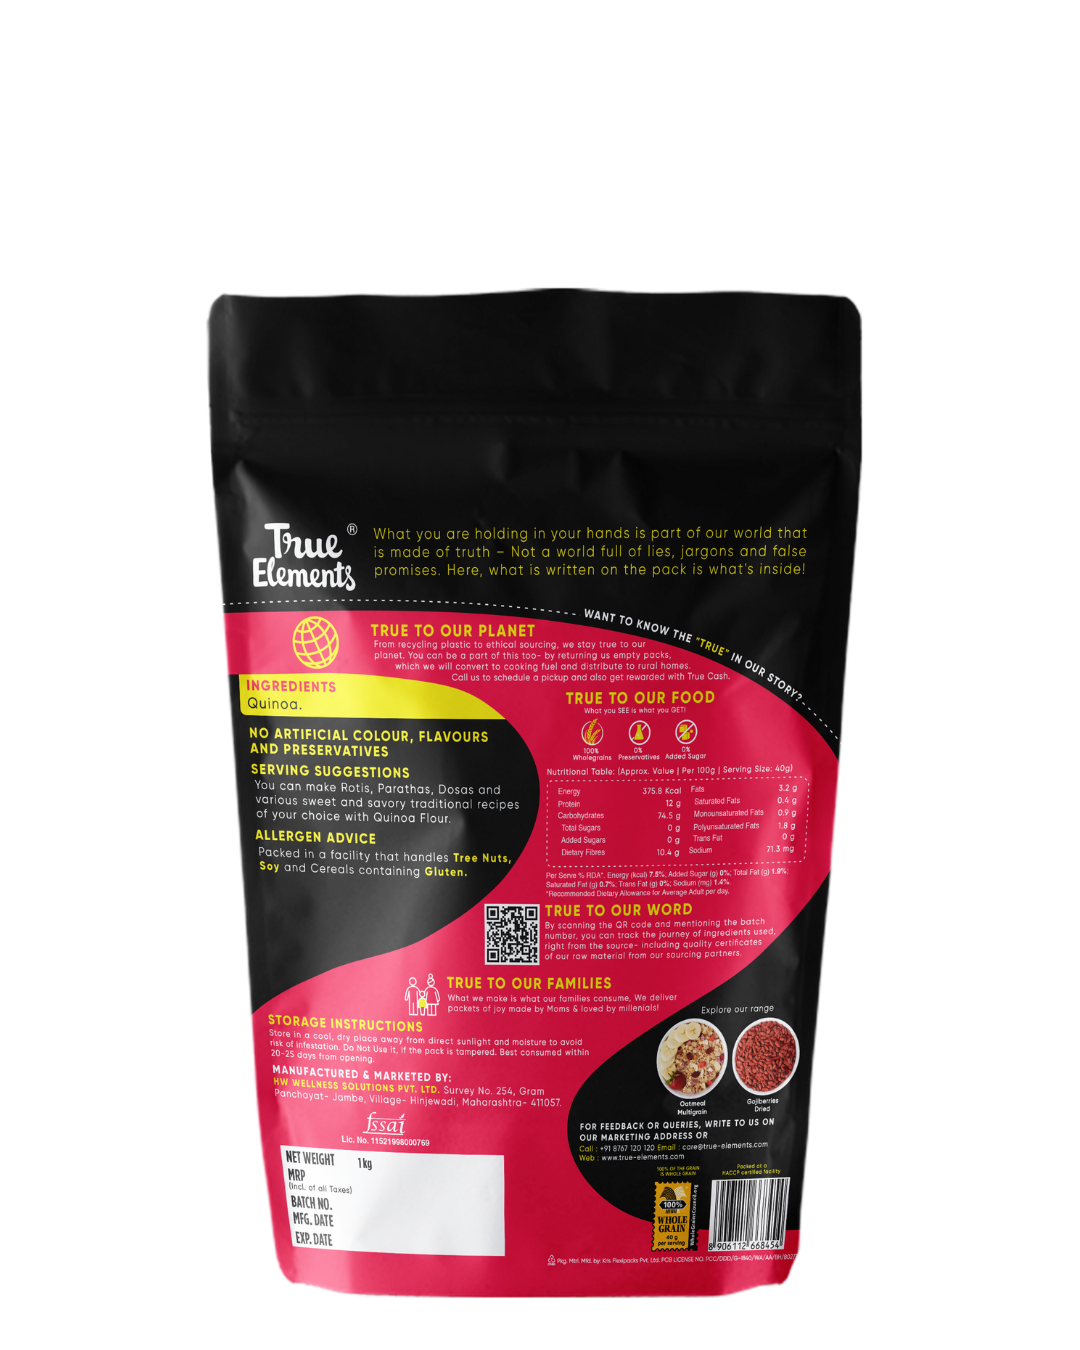 True Elements Quinoa Flour 1kg ingredients and nutritional value